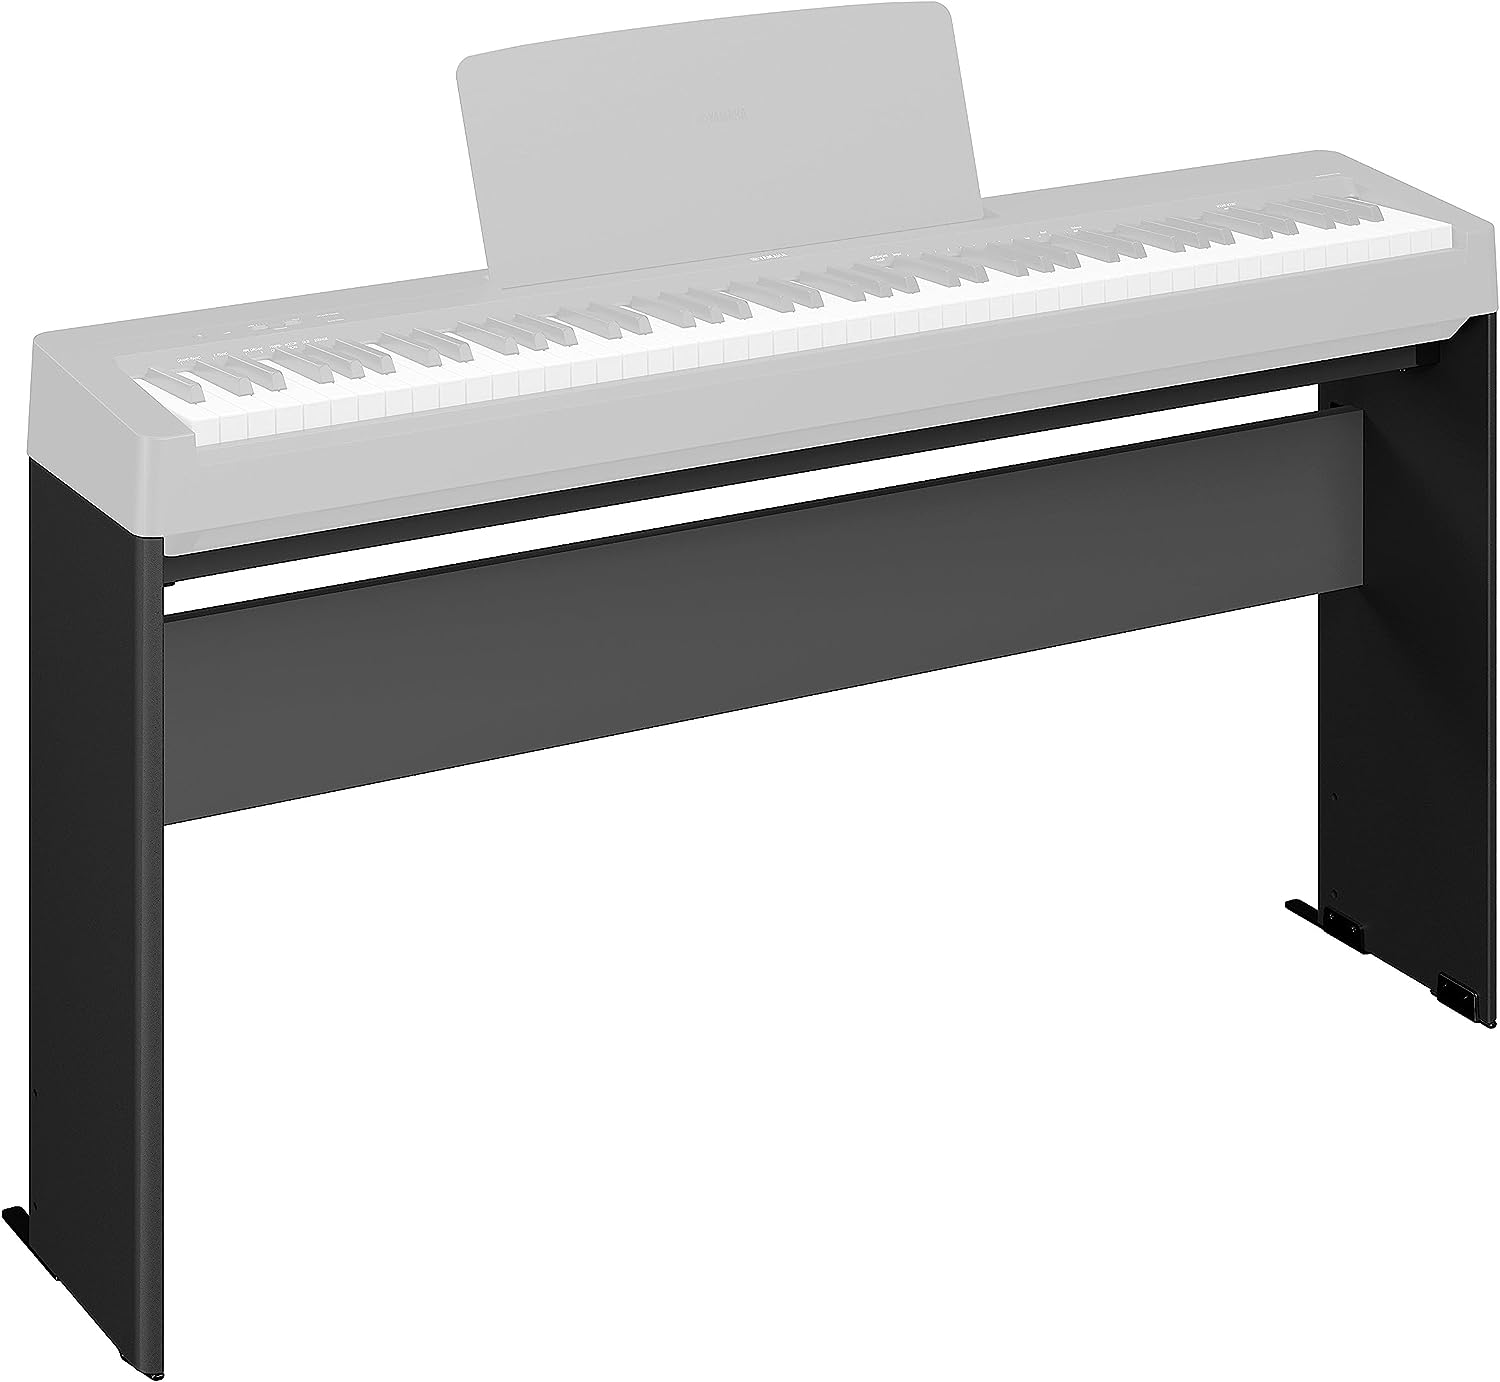 Yamaha P-145 Black  + Stand L100-b + Pedalier Lp5 - Portable digital piano - Variation 2